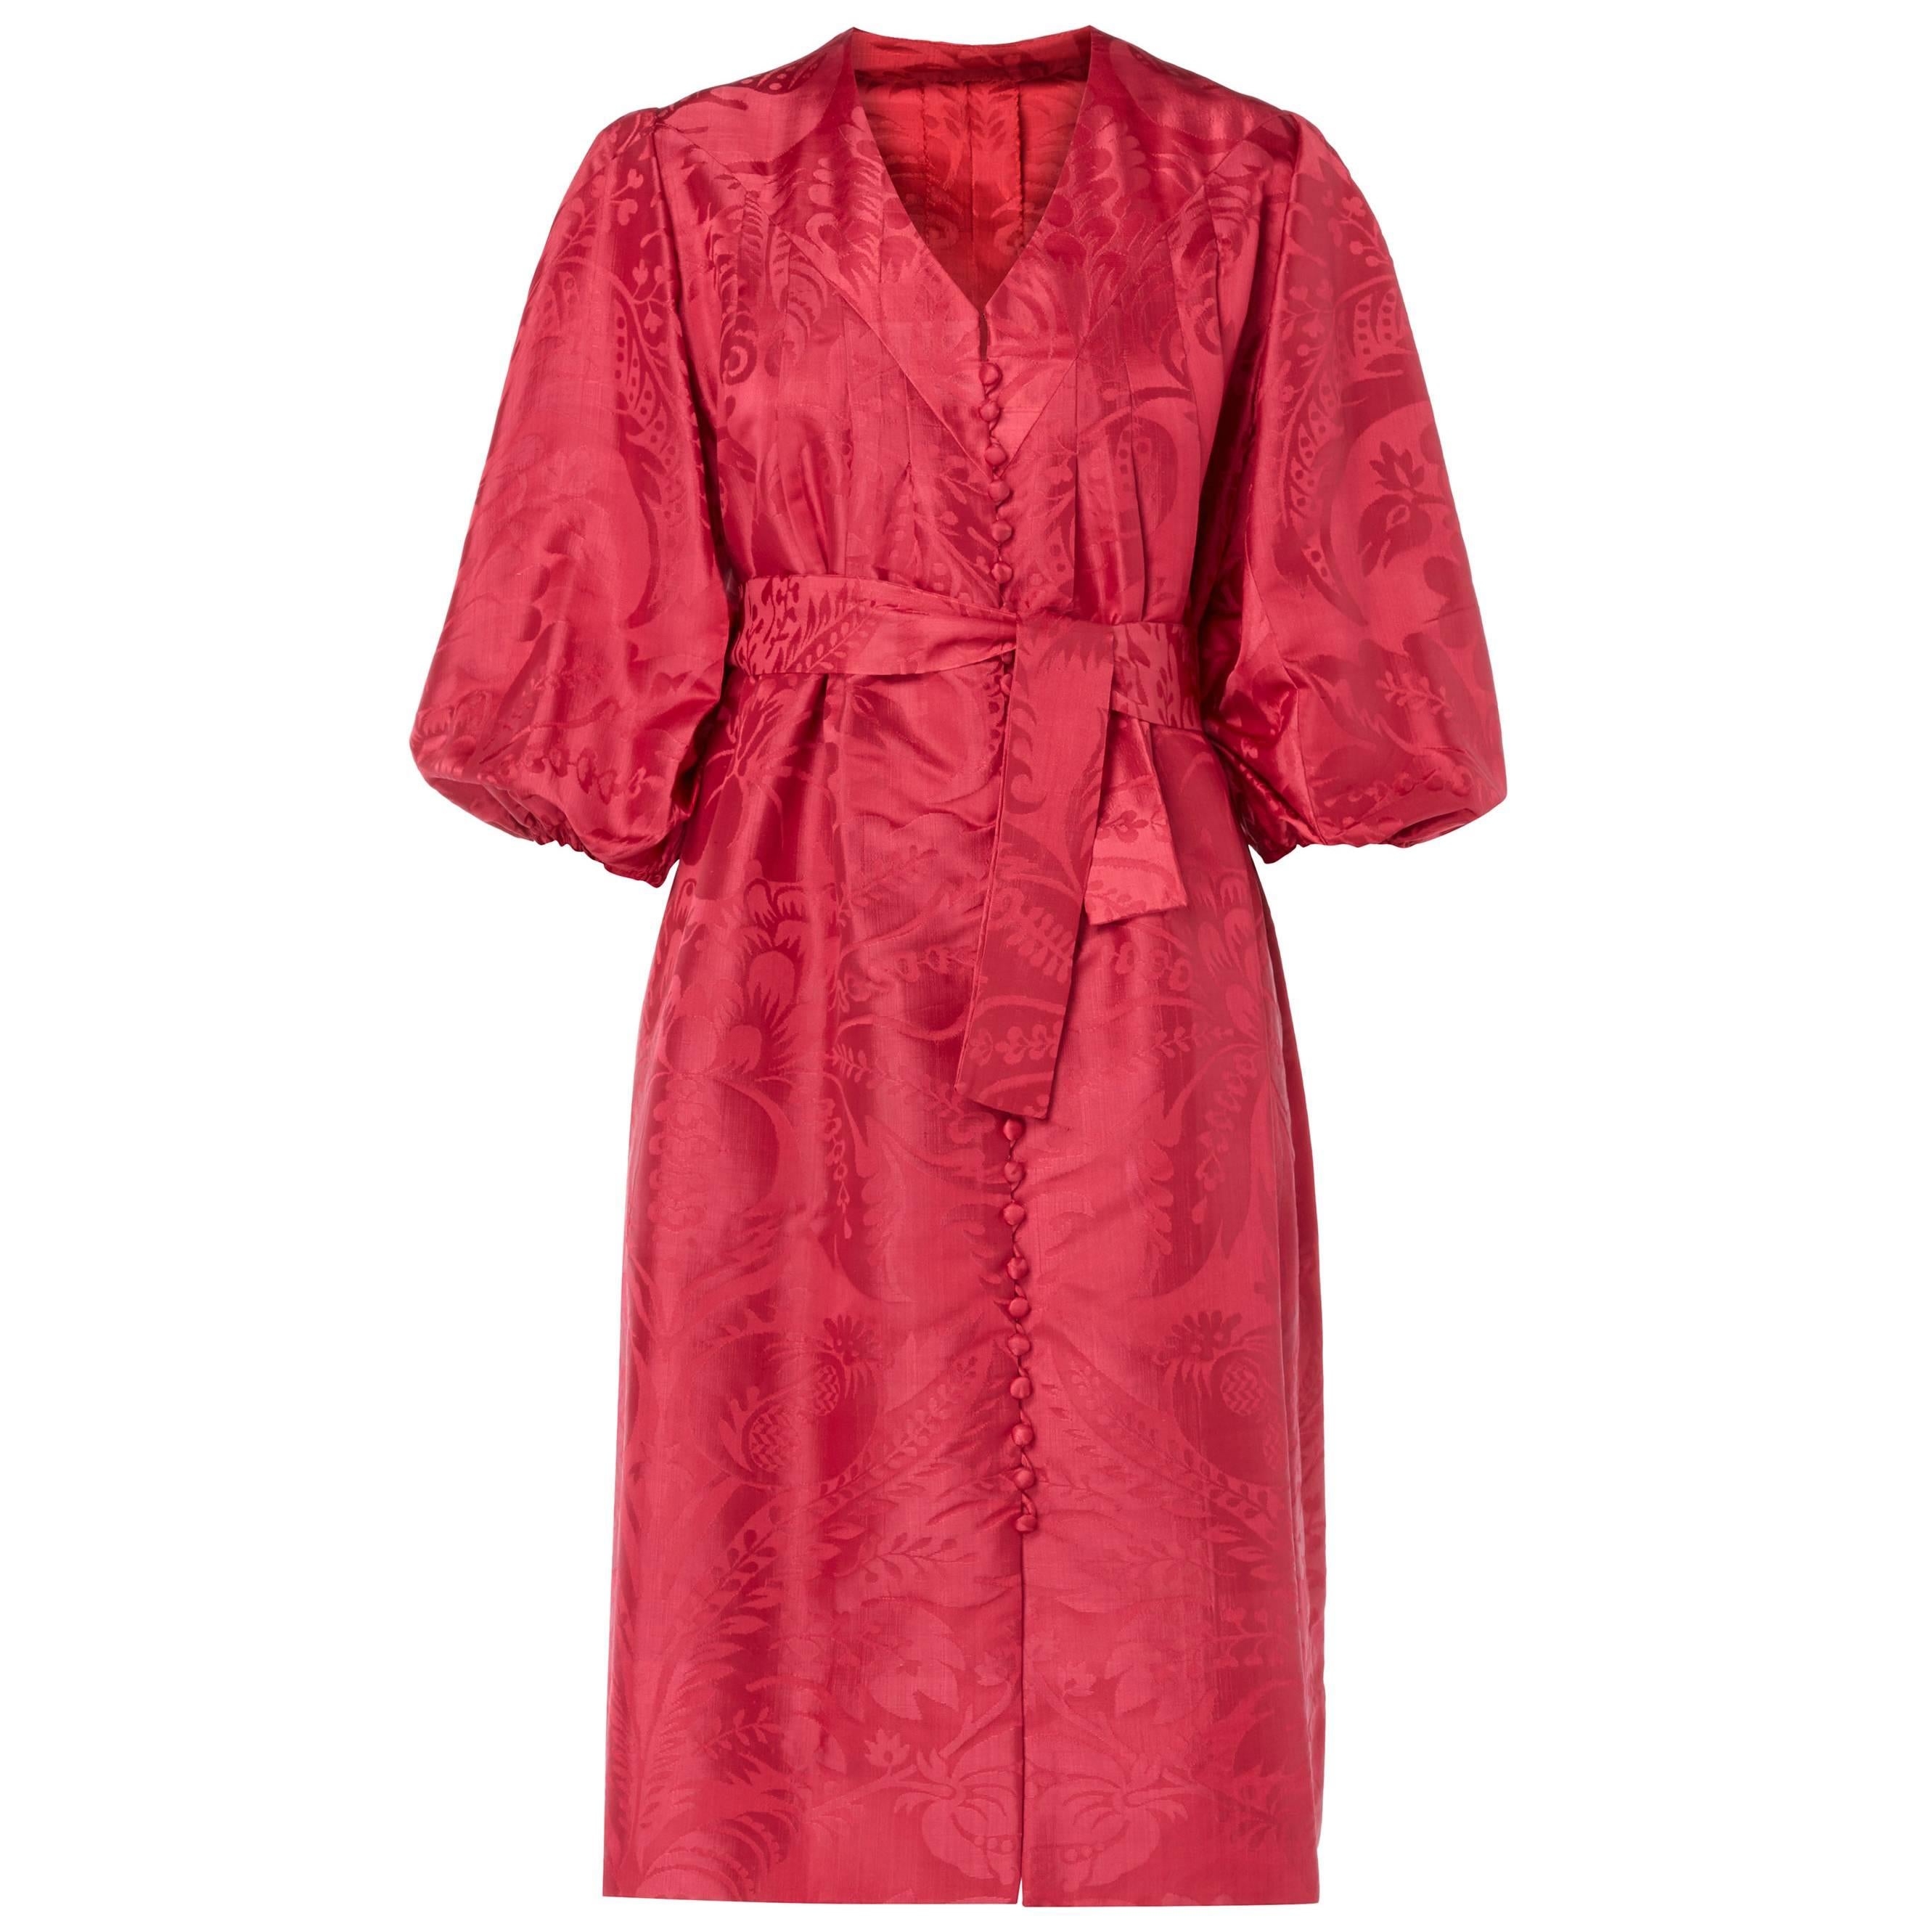 Echegaray red dress, circa 1960 For Sale